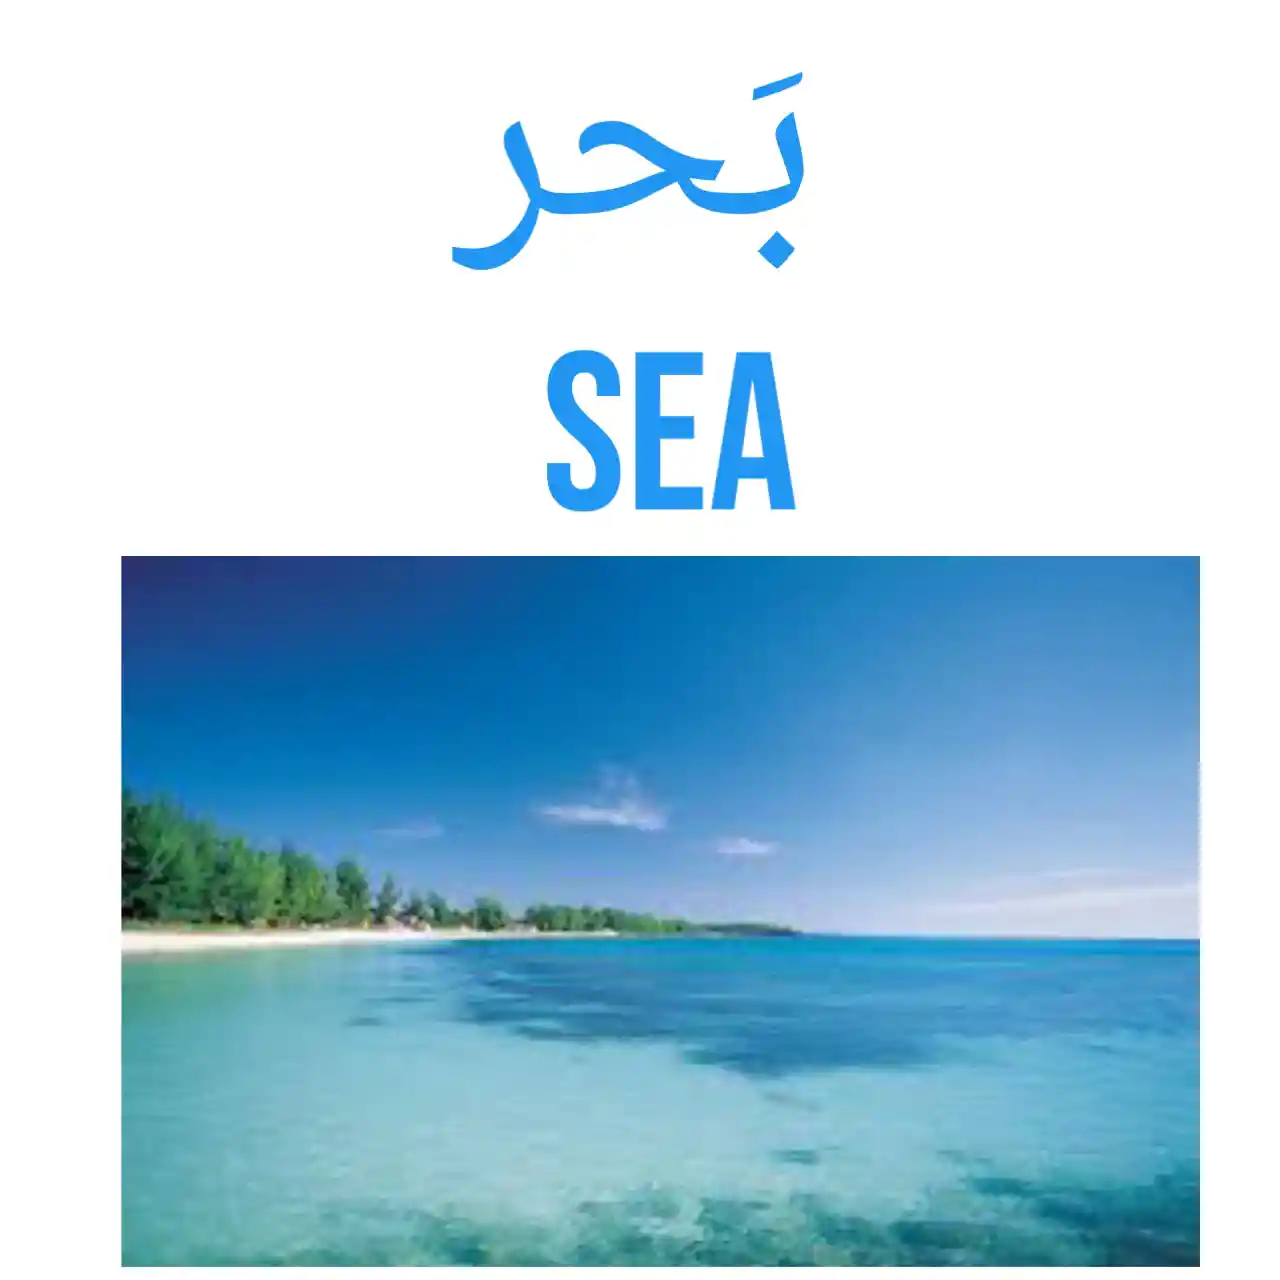 Sea in Arabic